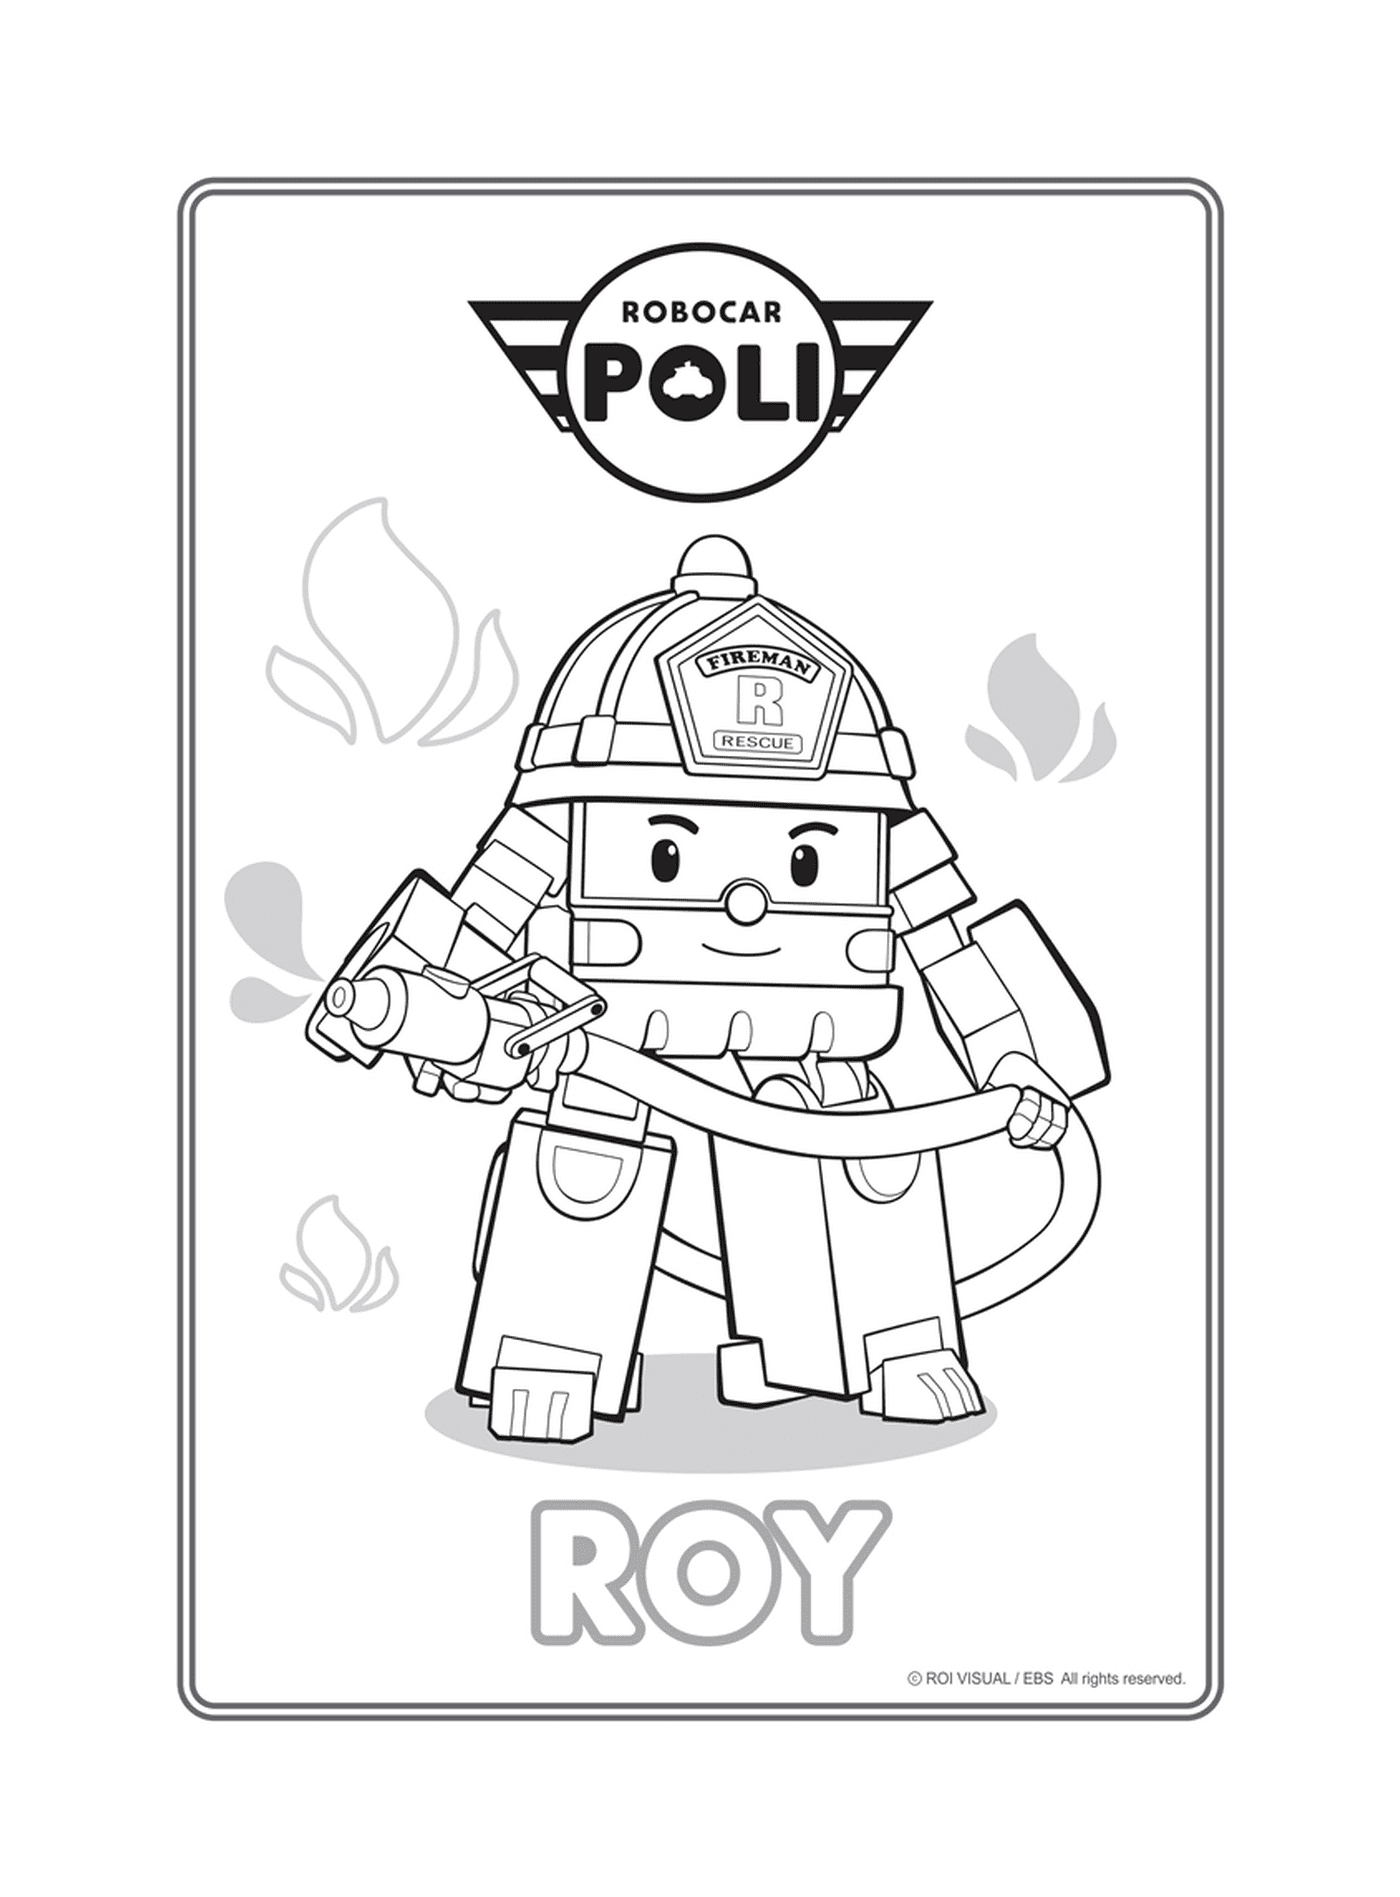  Roy, Robocar Polis Feuerwehrmann 